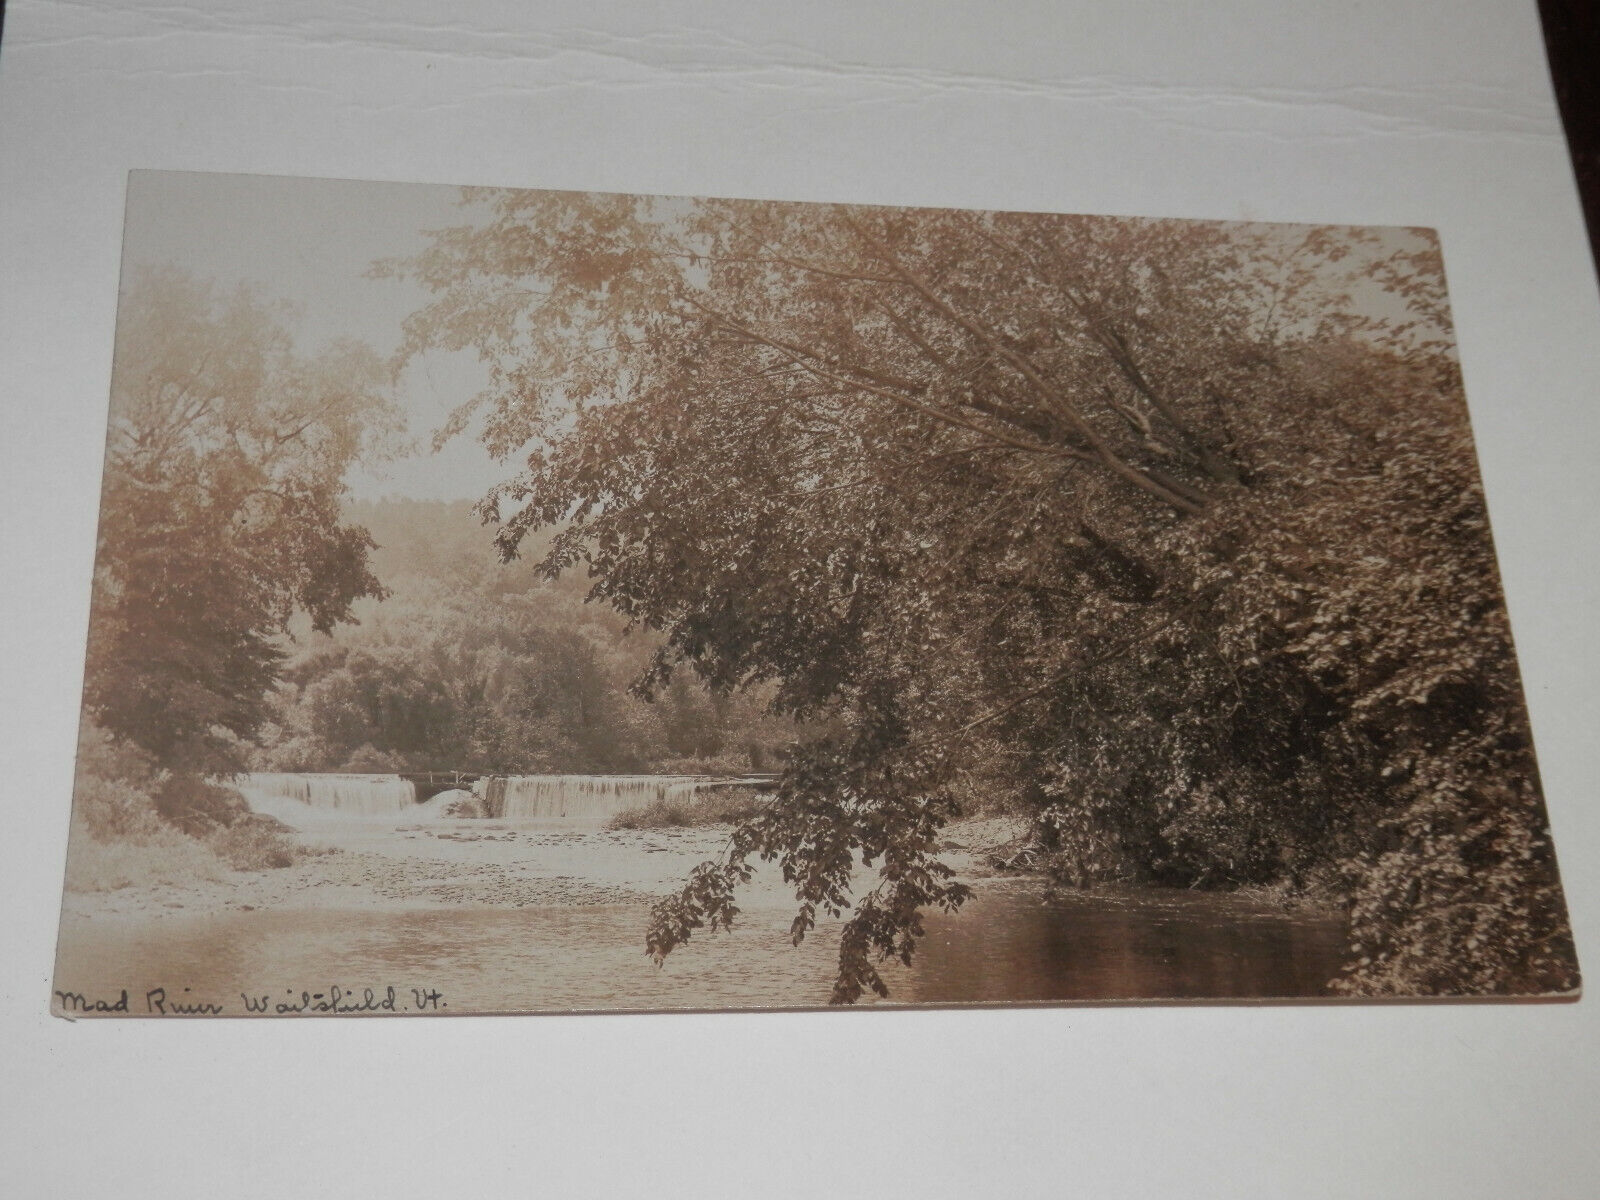 WAITSFIELD VT - 1908 REAL PHOTO POSTCARD - MAD RIVER - WASHINGTON COUNTY